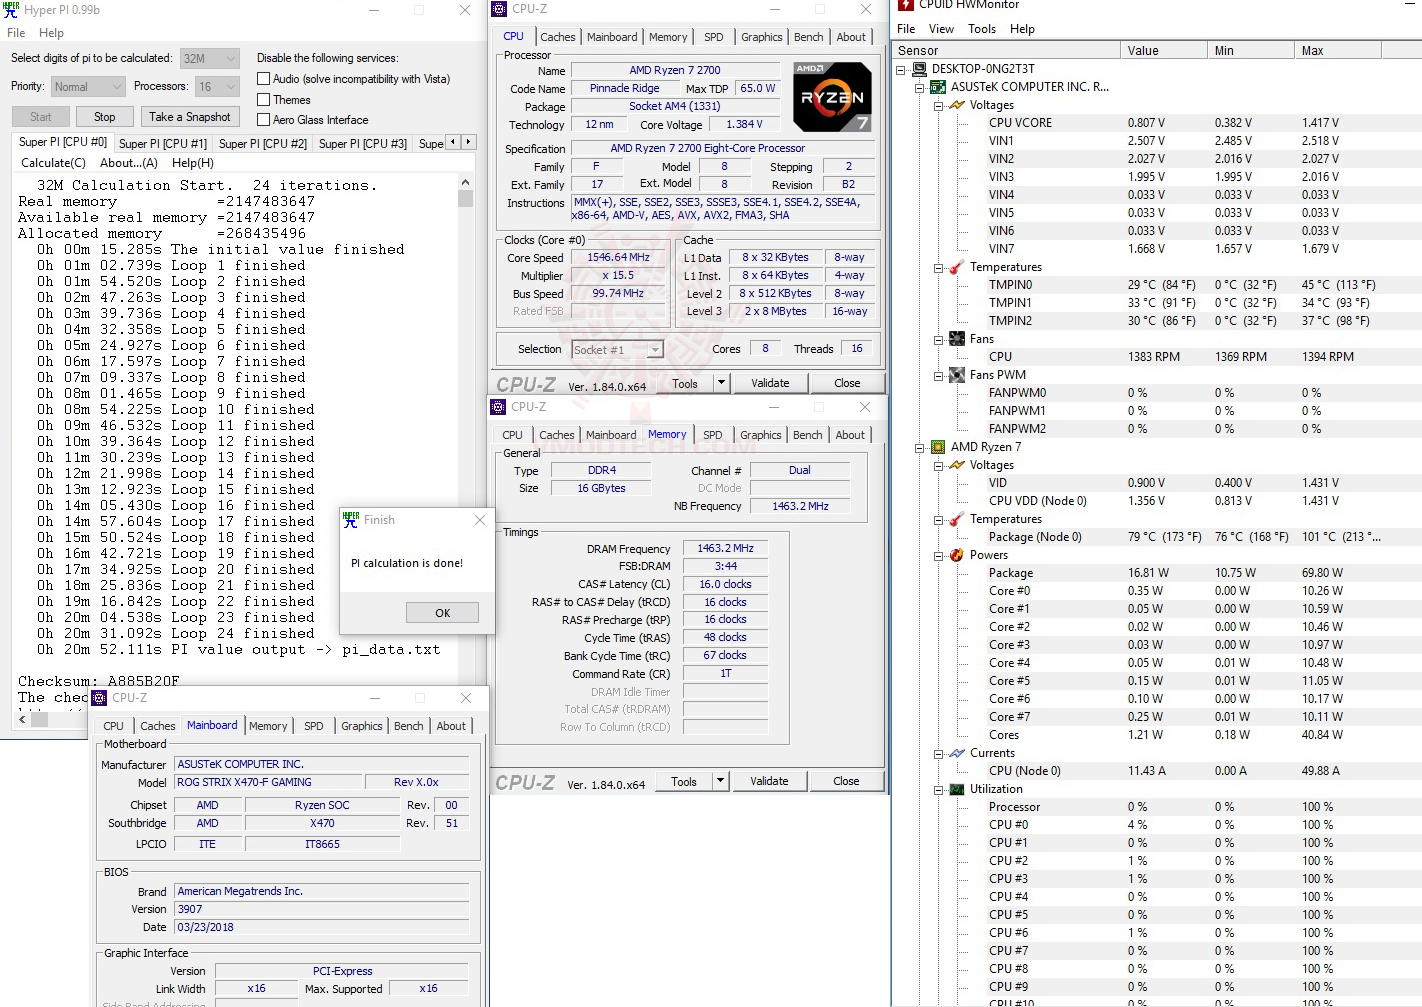 h32 1 AMD RYZEN 7 2700 PROCESSOR REVIEW 